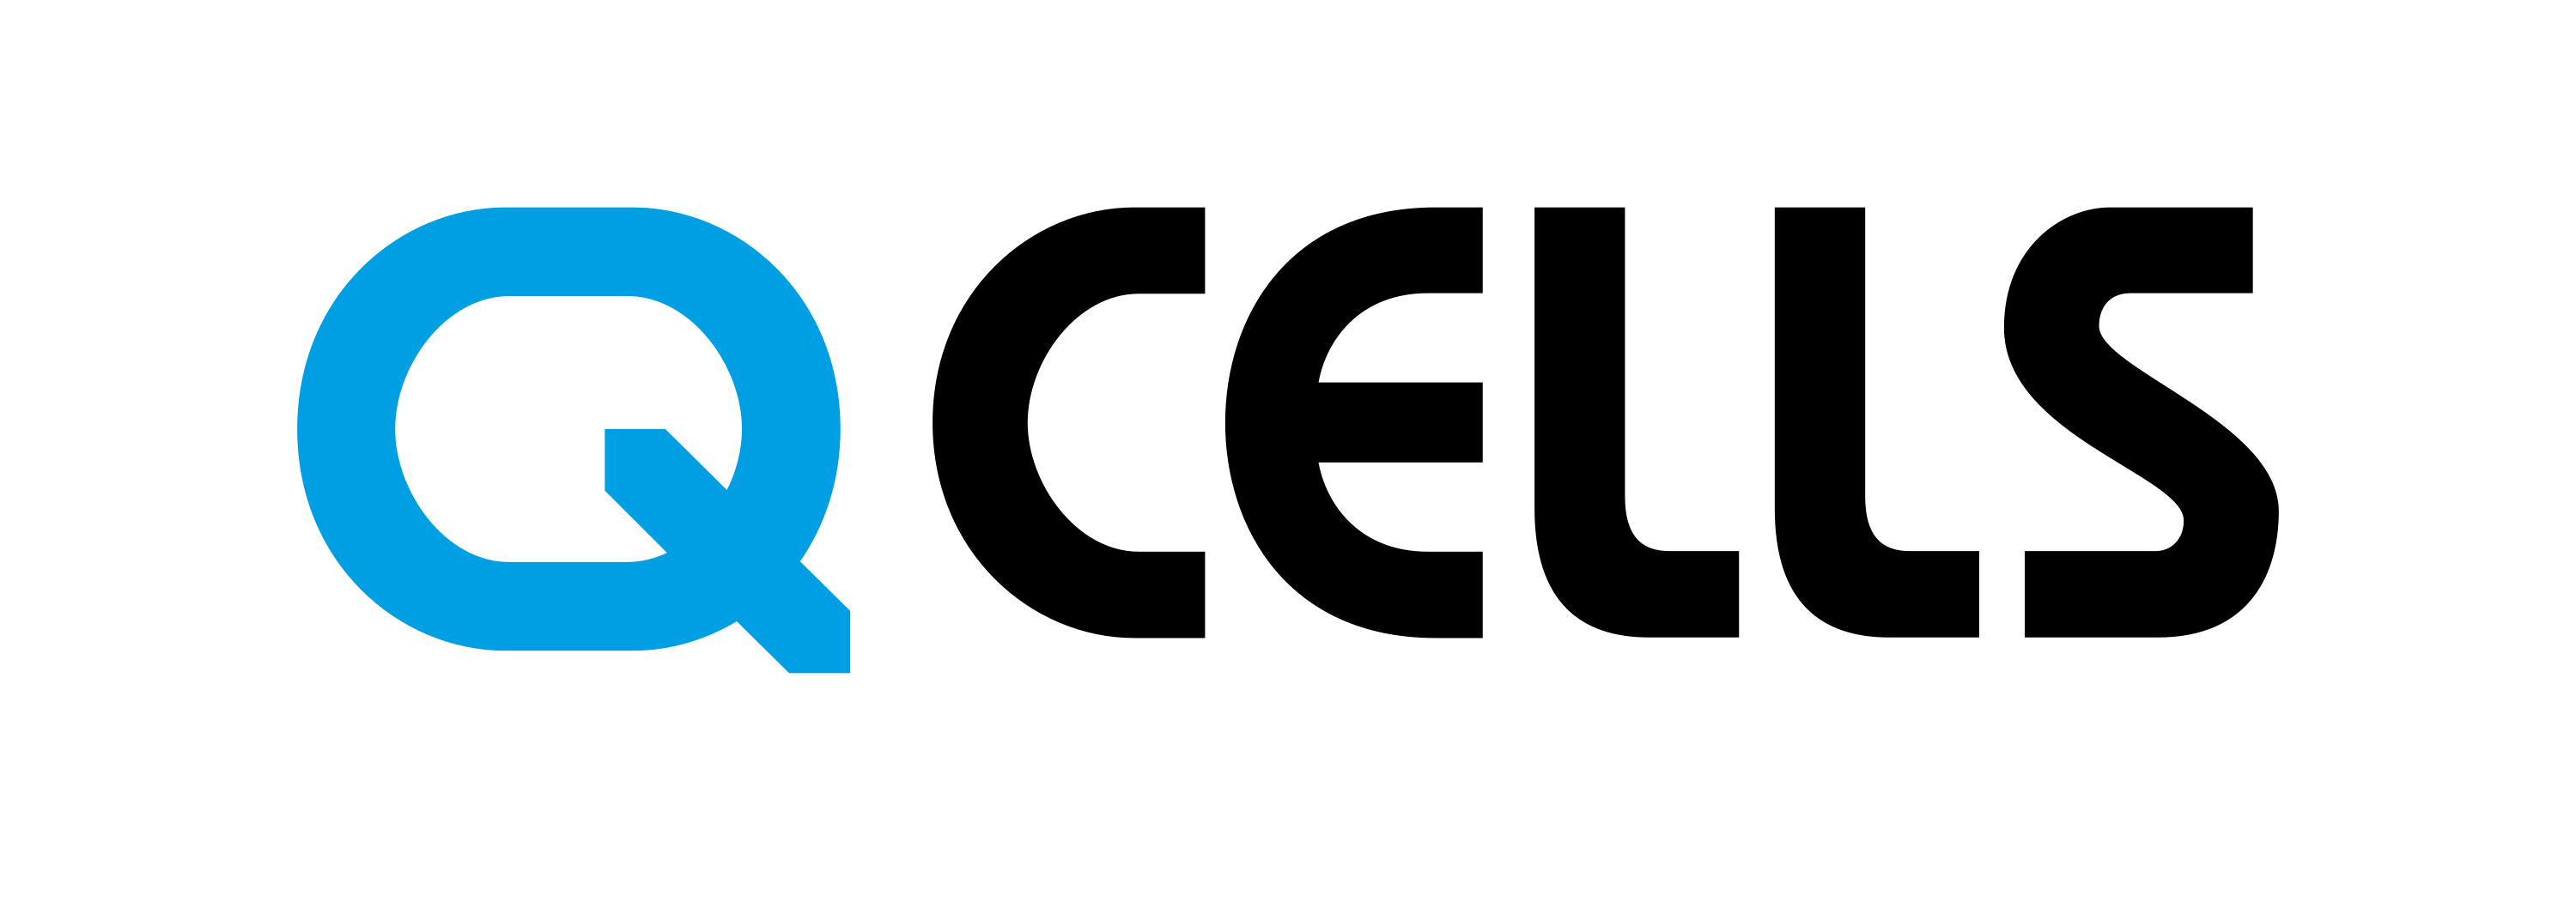 QCells-Logo-1